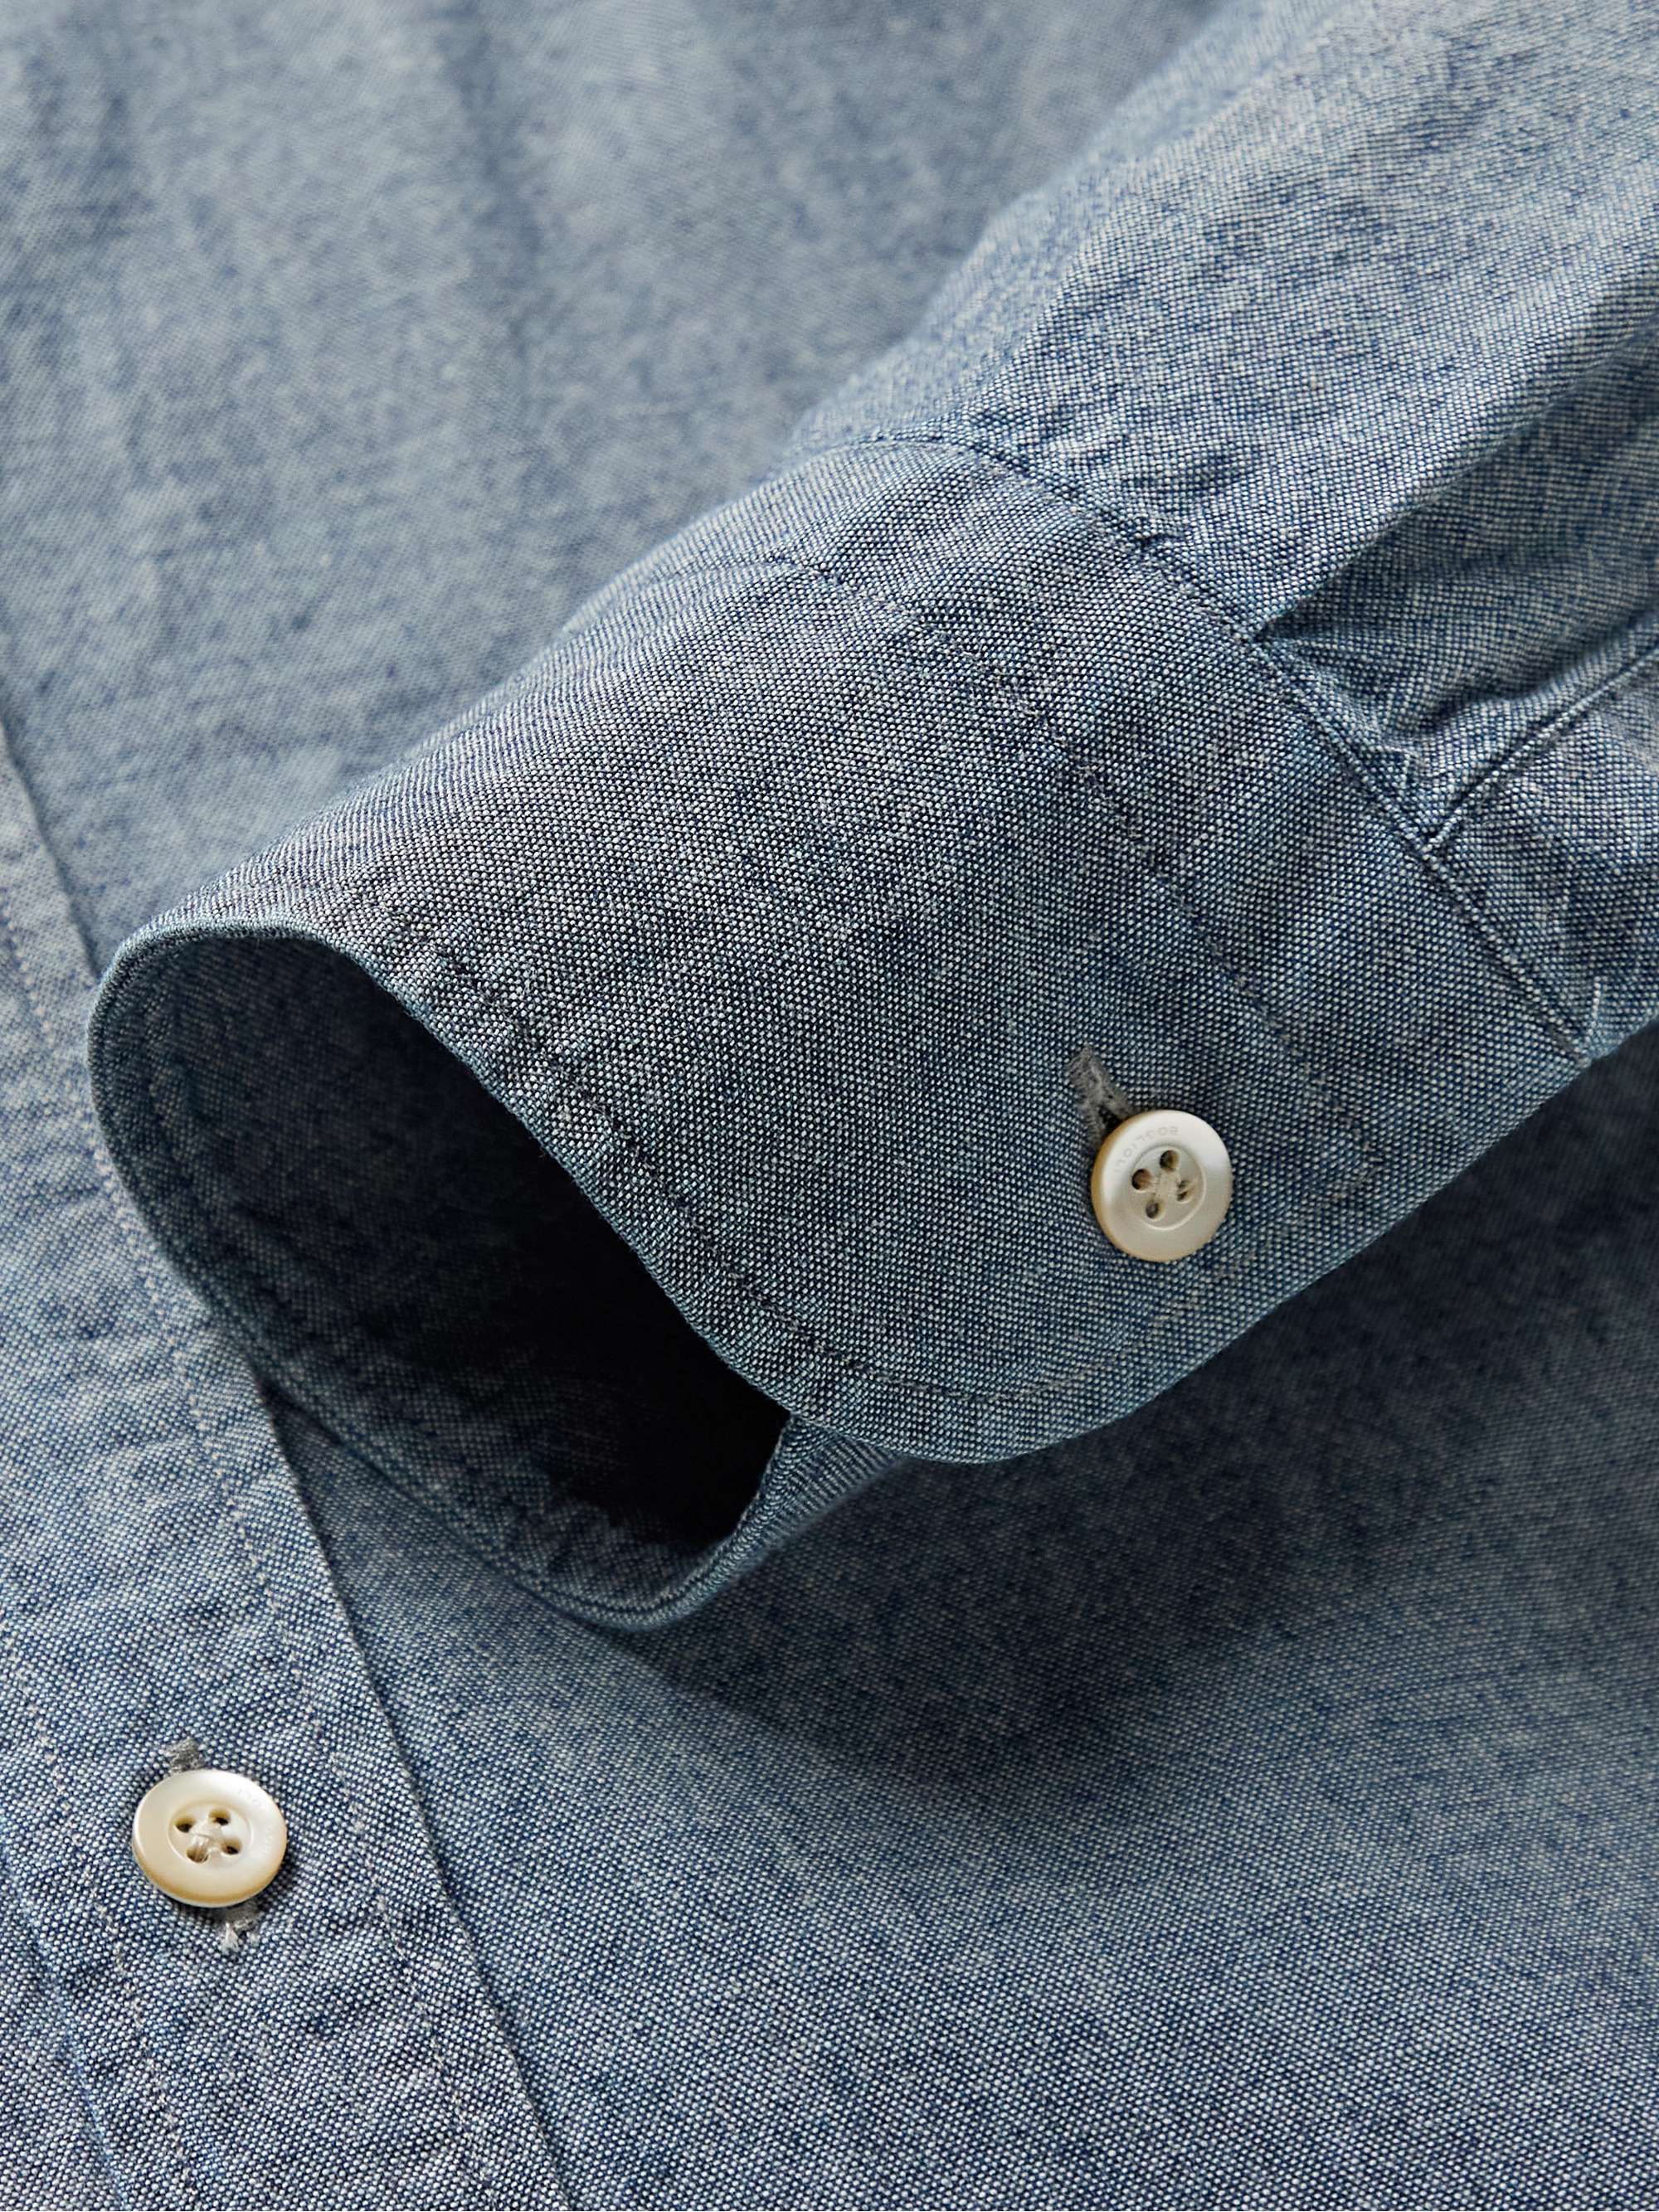 BOGLIOLI Slim-Fit Button-Down Collar Cotton-Chambray Shirt